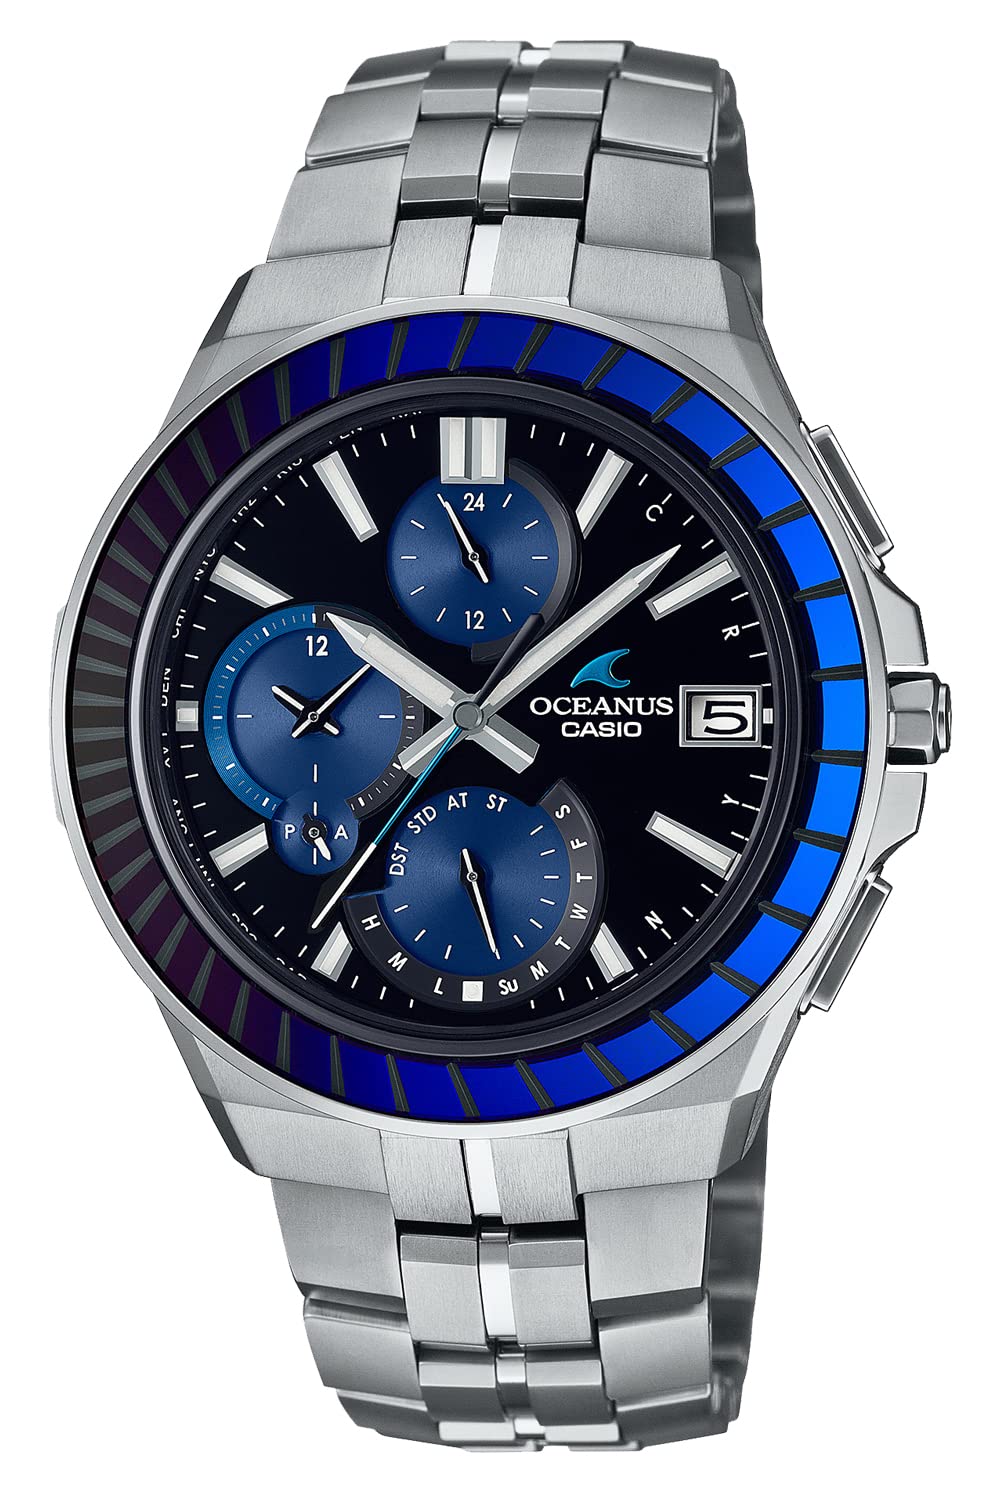 Casio OCW-S5000EK-1AJF [Oceanus Manta] Bluetooth Titanium Watch Shipped from Japan Released in June 2022